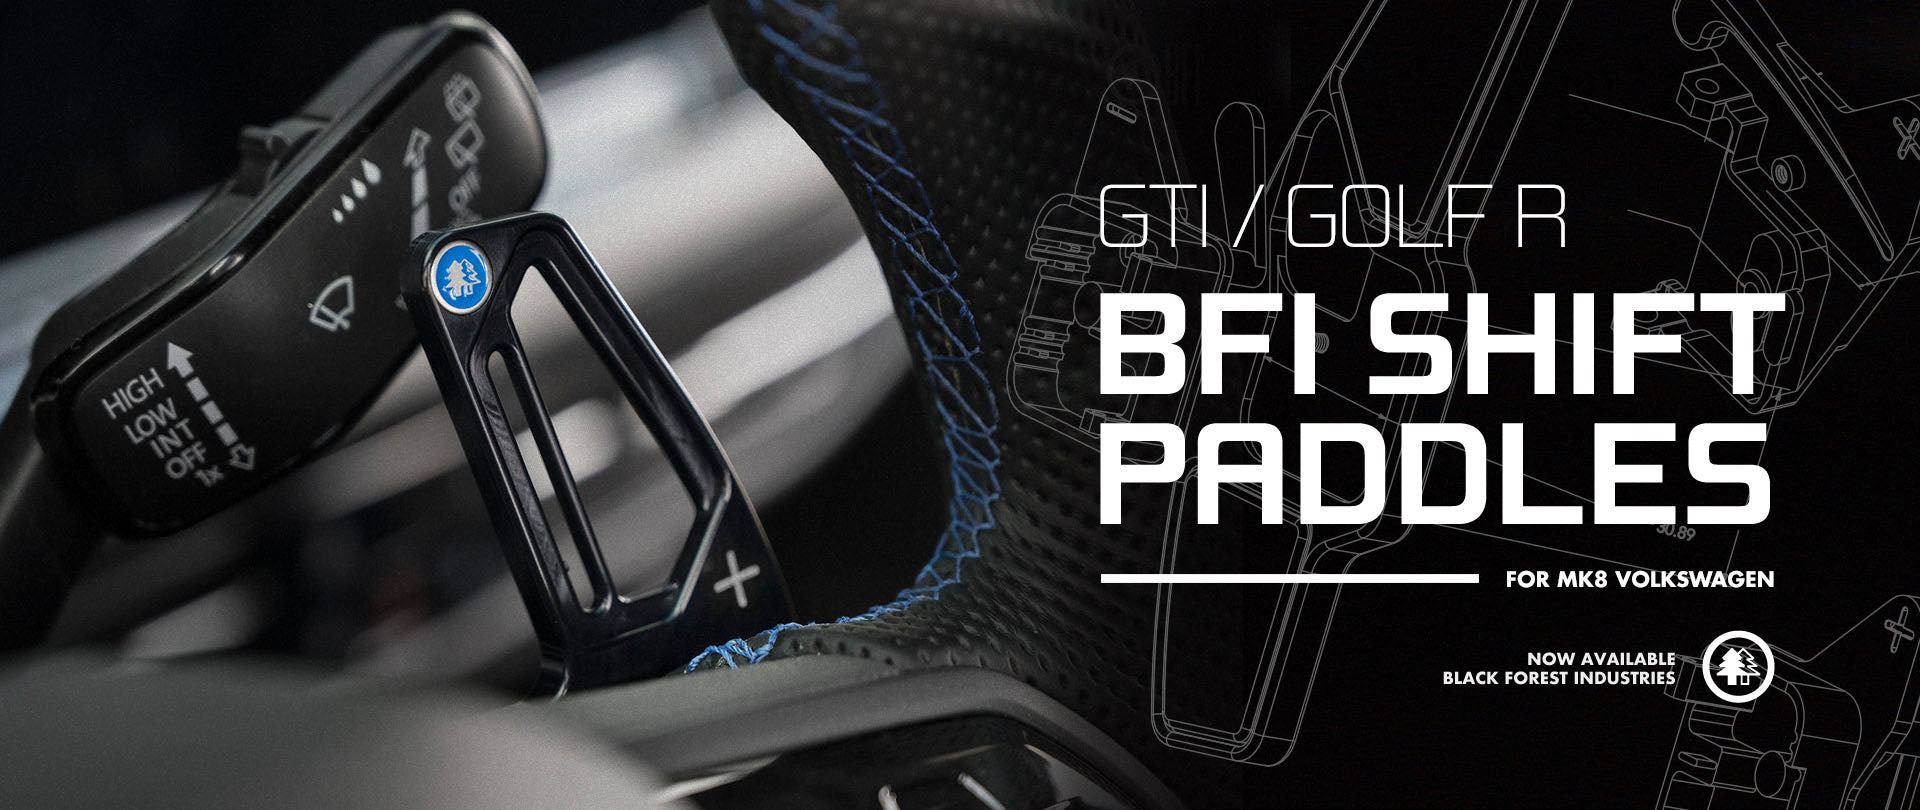 NEW BFI MK8 VW Shift Paddles – Black Forest Industries